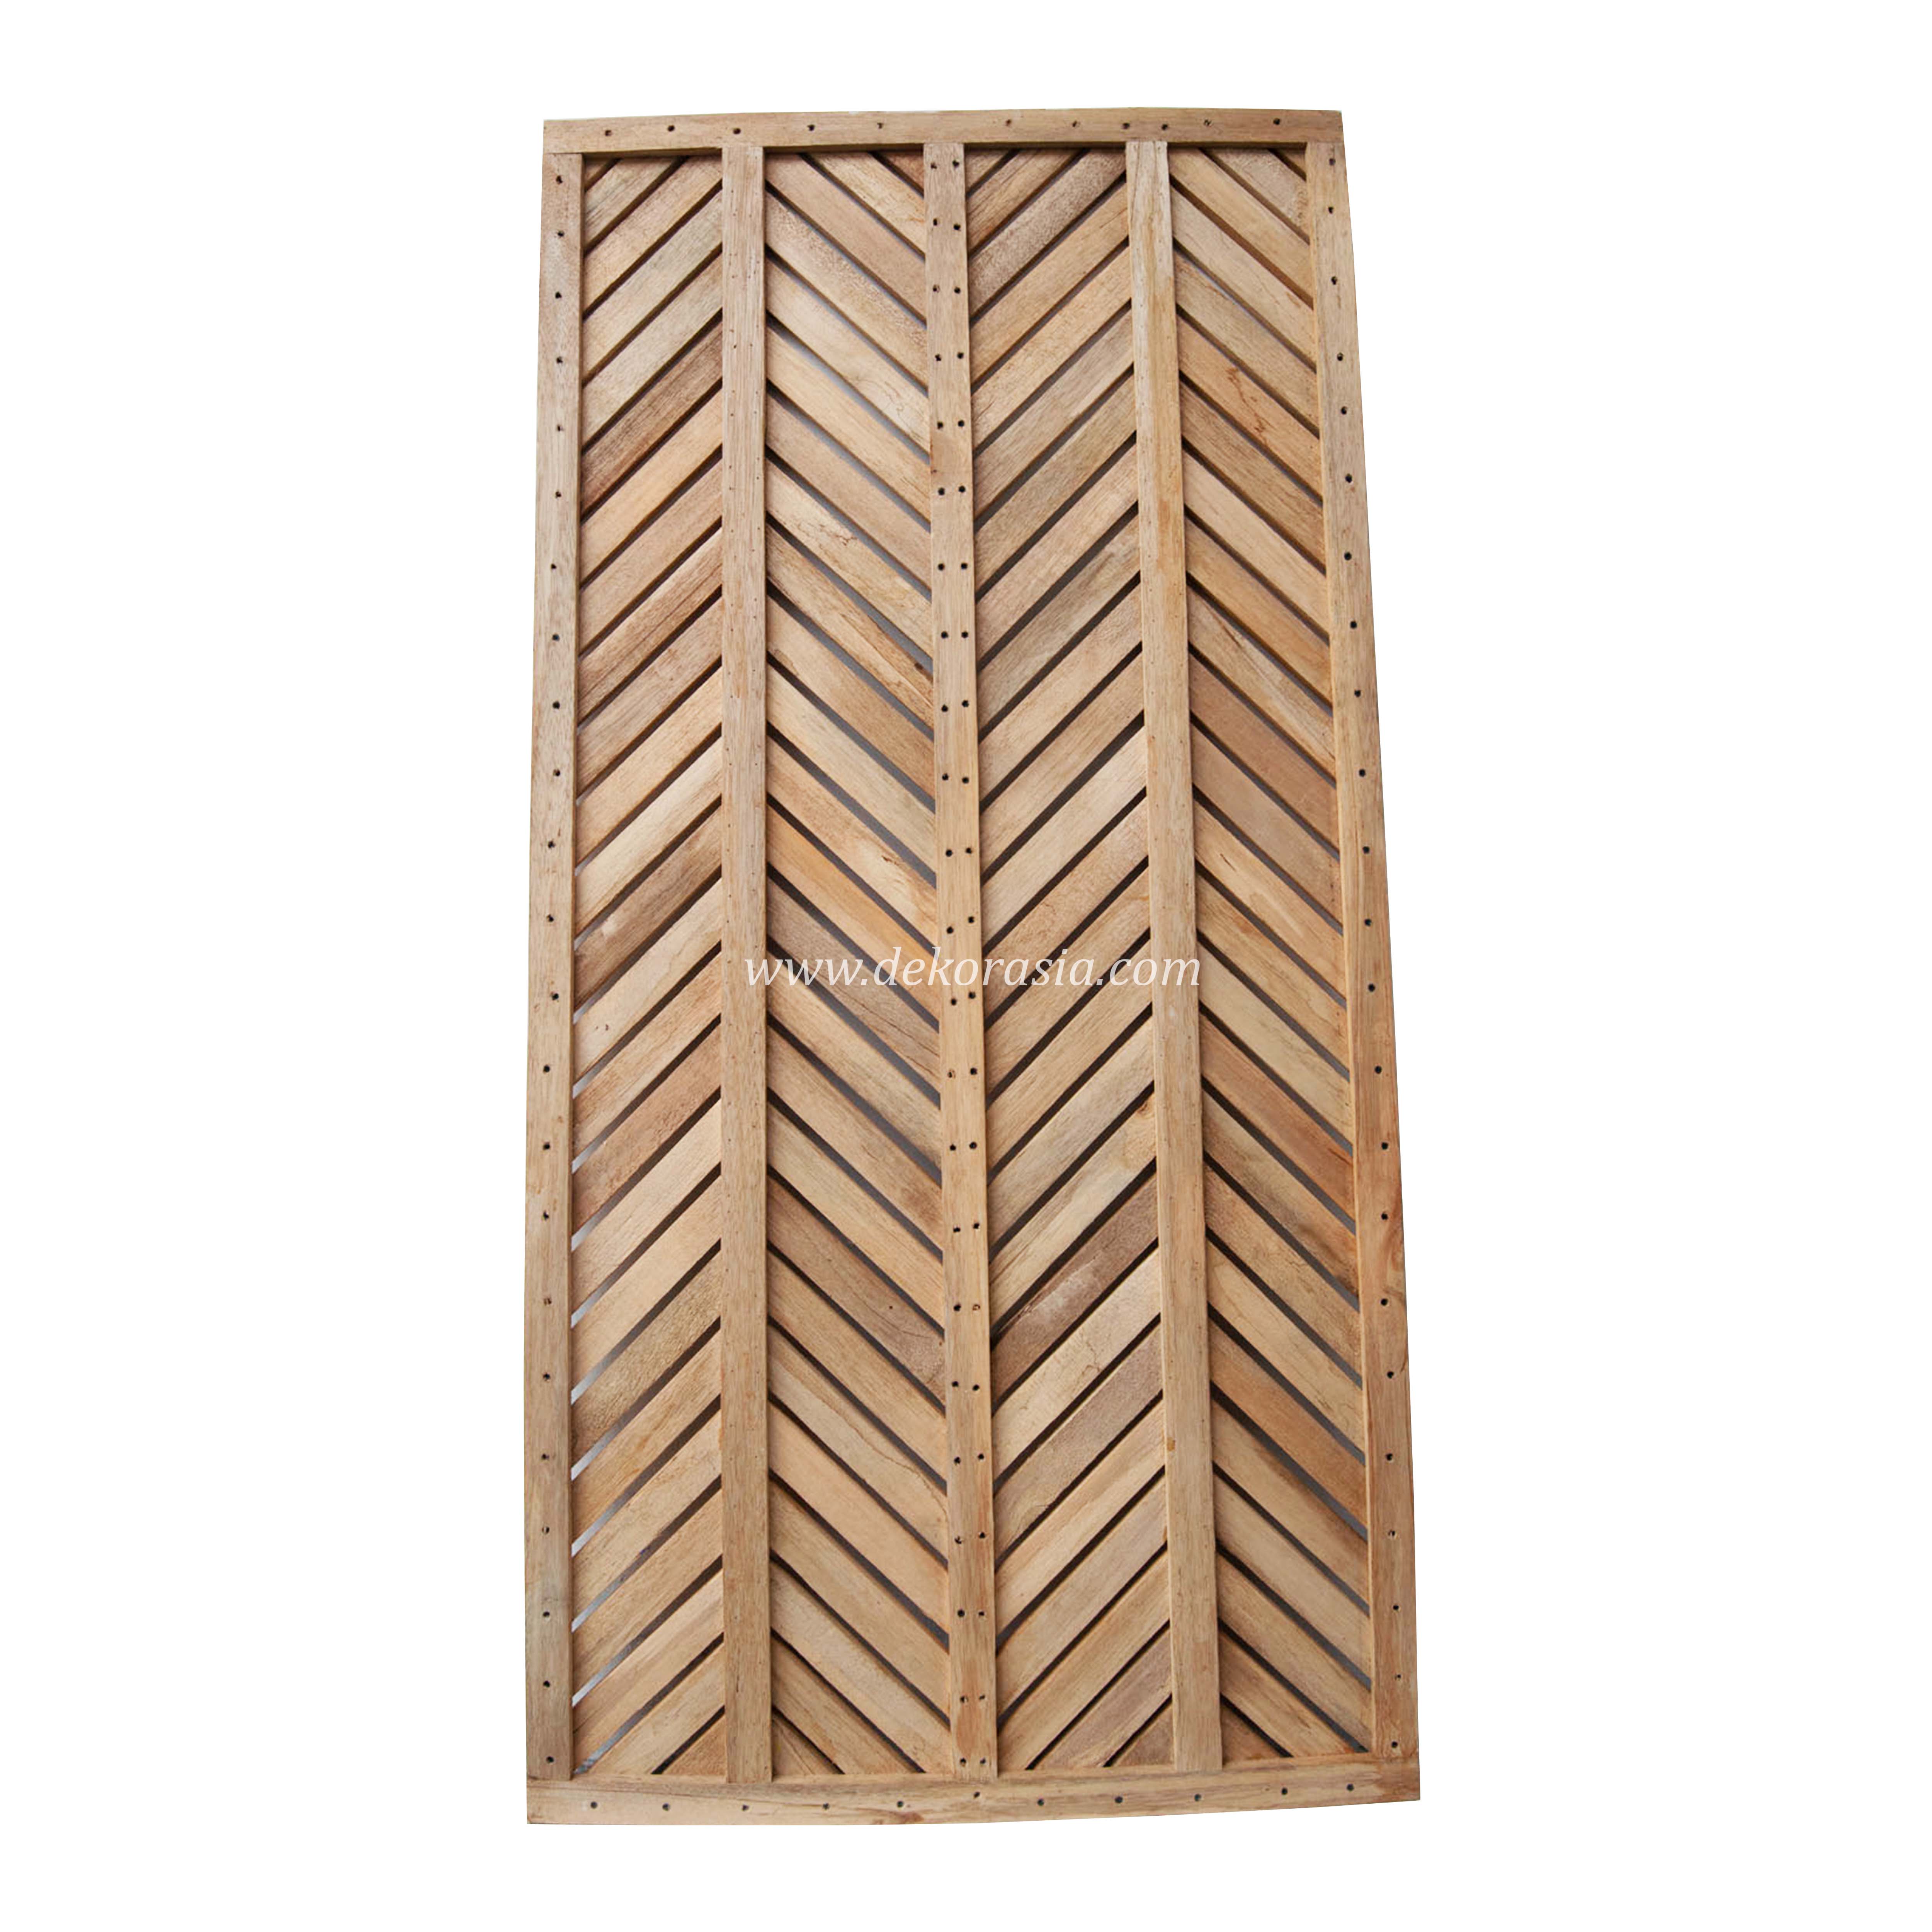 Wood Screen Merbau, Wood Panels Wave Pattern Design (Intsia retusa) - Wood Fence for Indoor & Outdoor